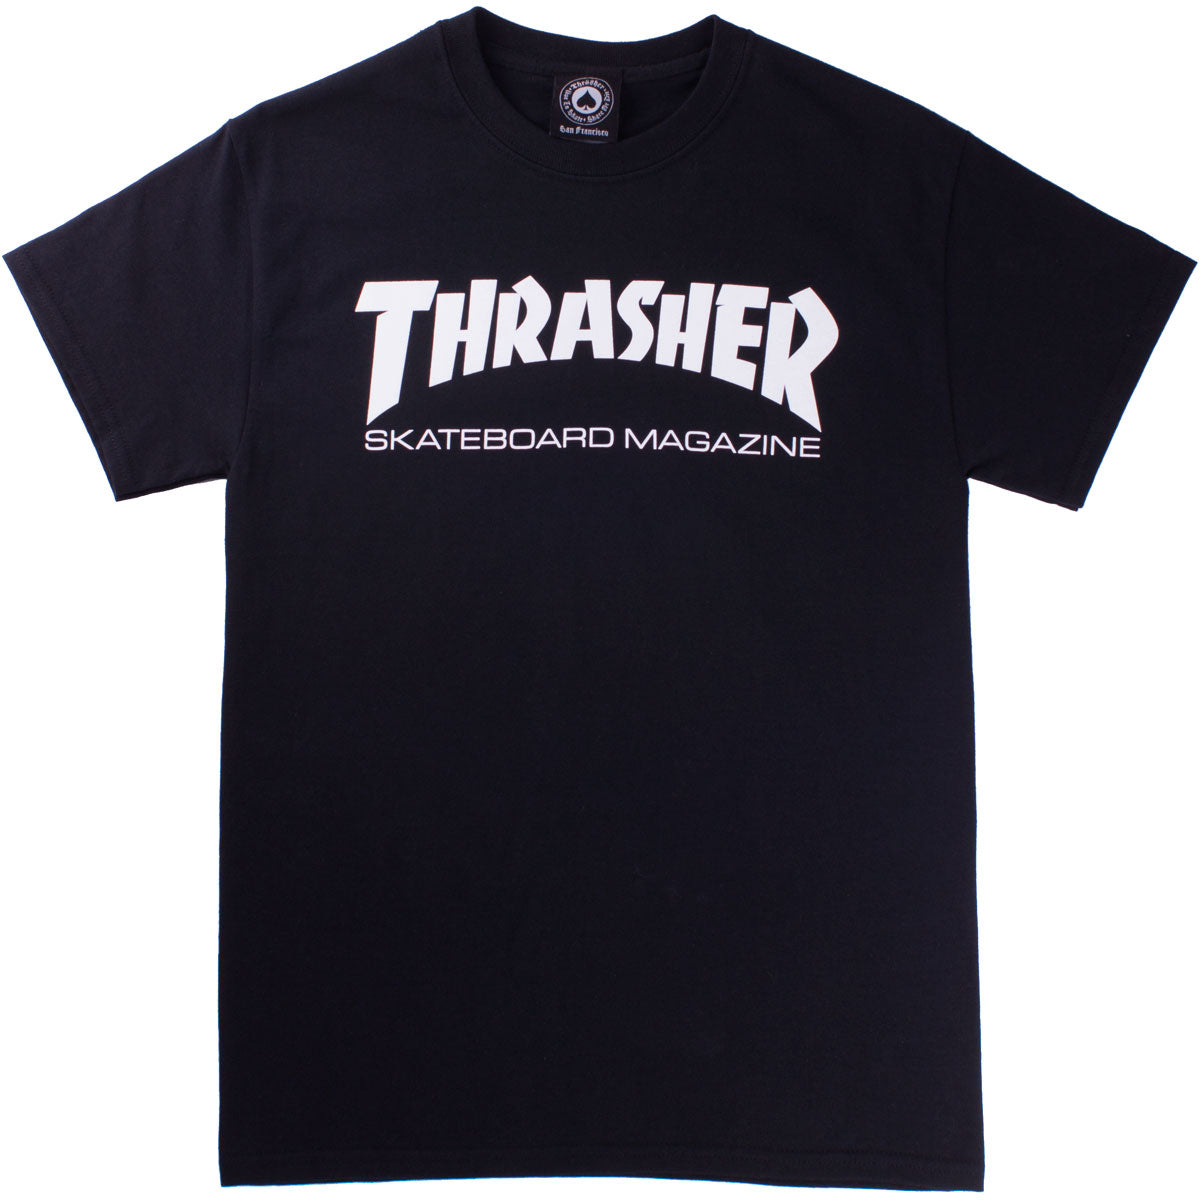 Thrasher Skate Mag T-Shirt - Black image 1